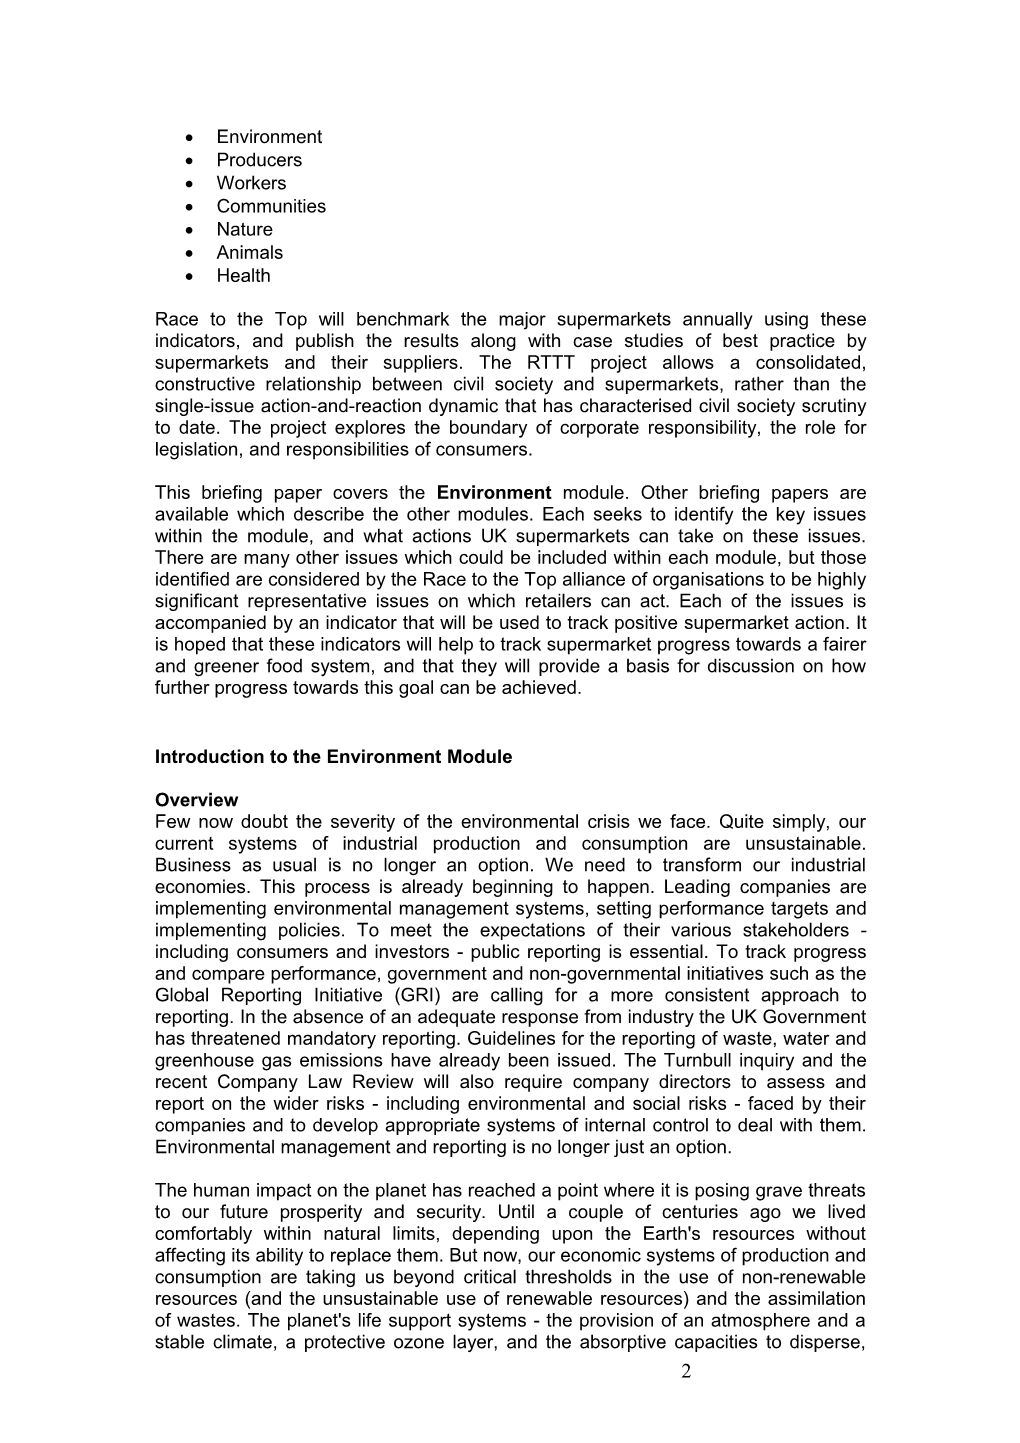 Environment Module Briefing Paper